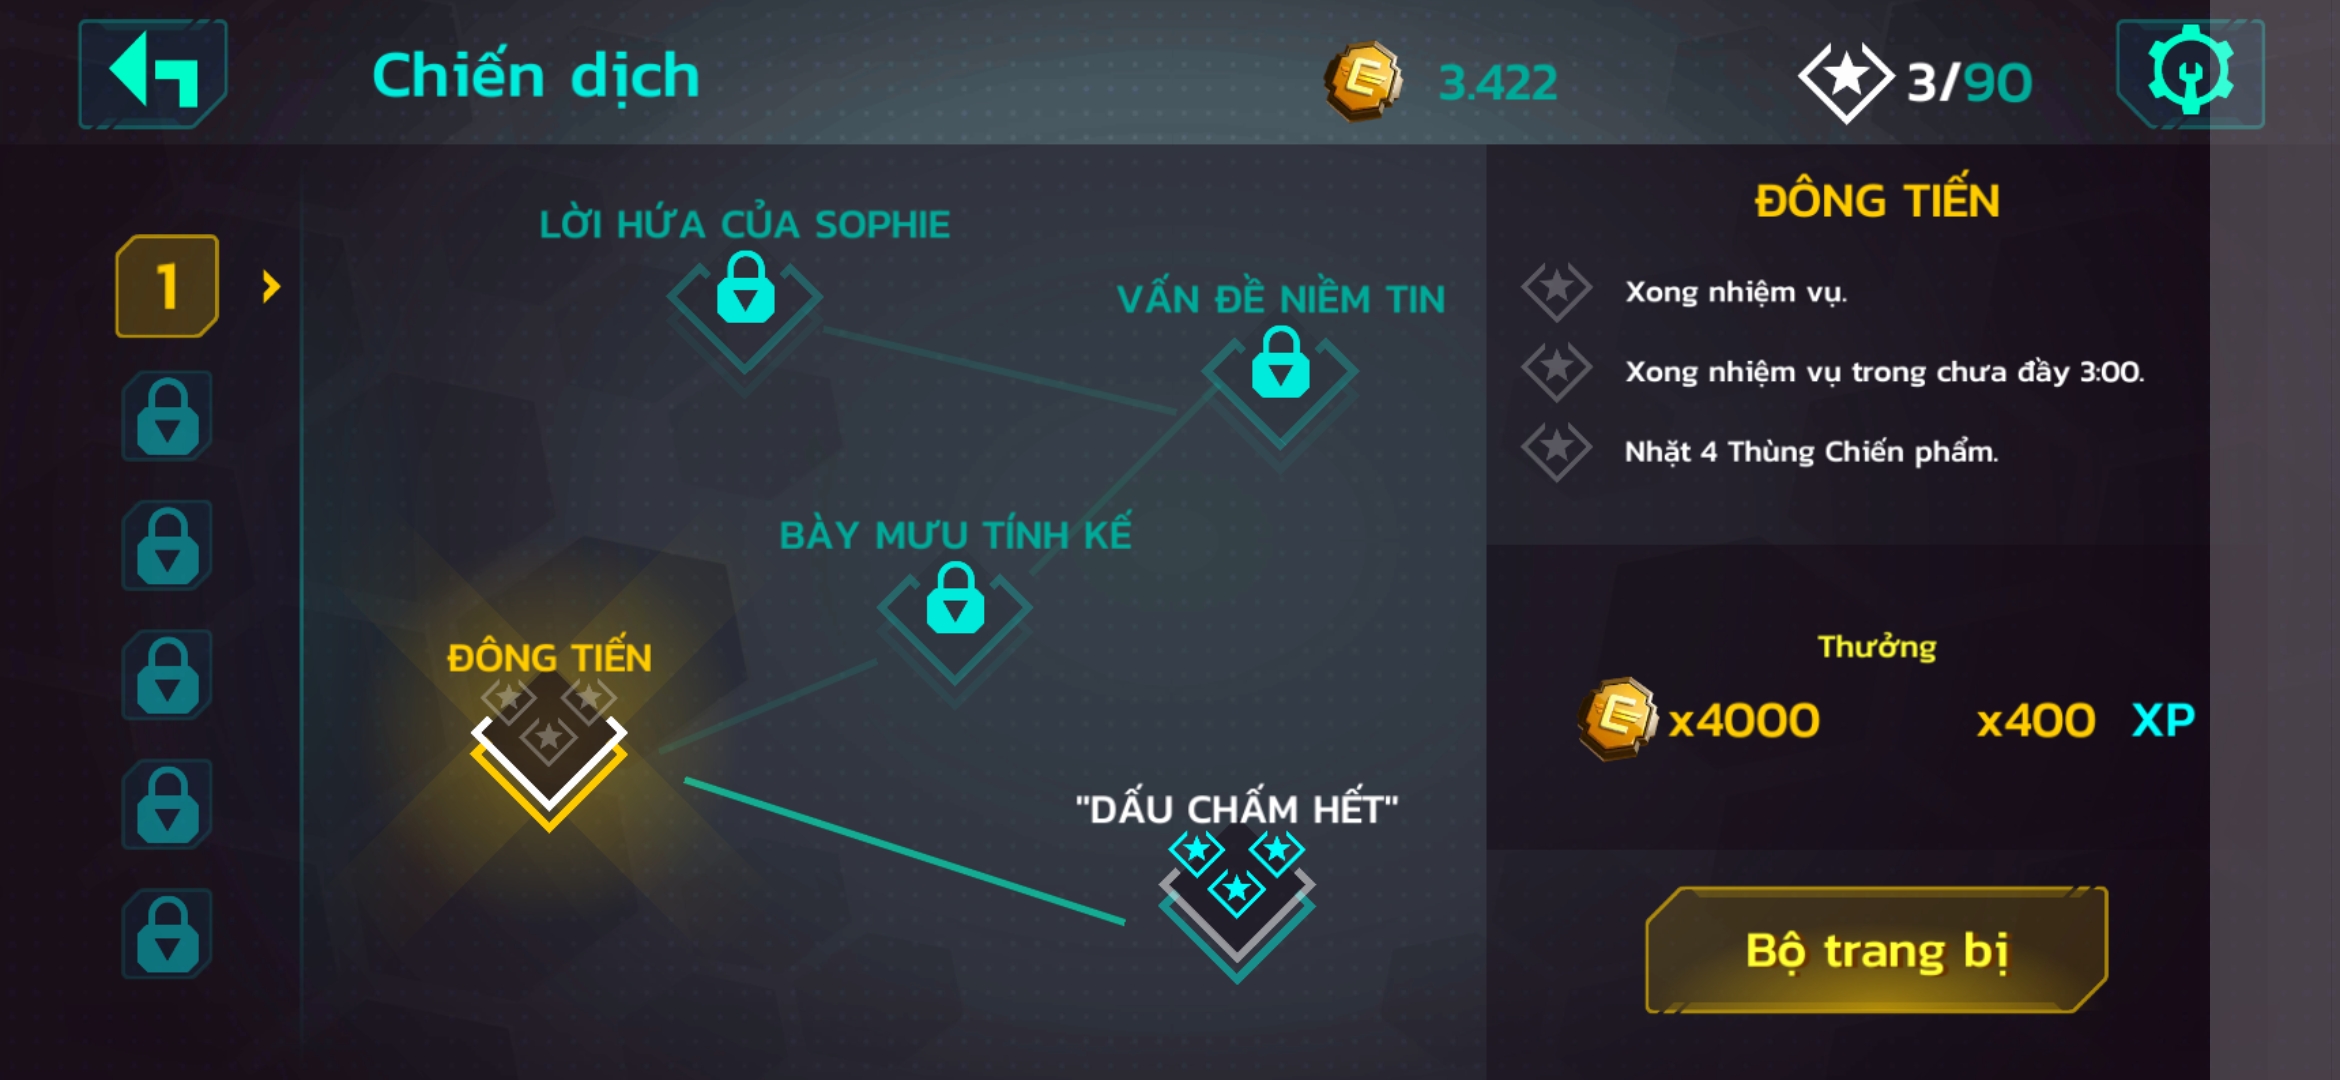 [Game Android] Modern Combat: Rebel Guns Tiếng Việt